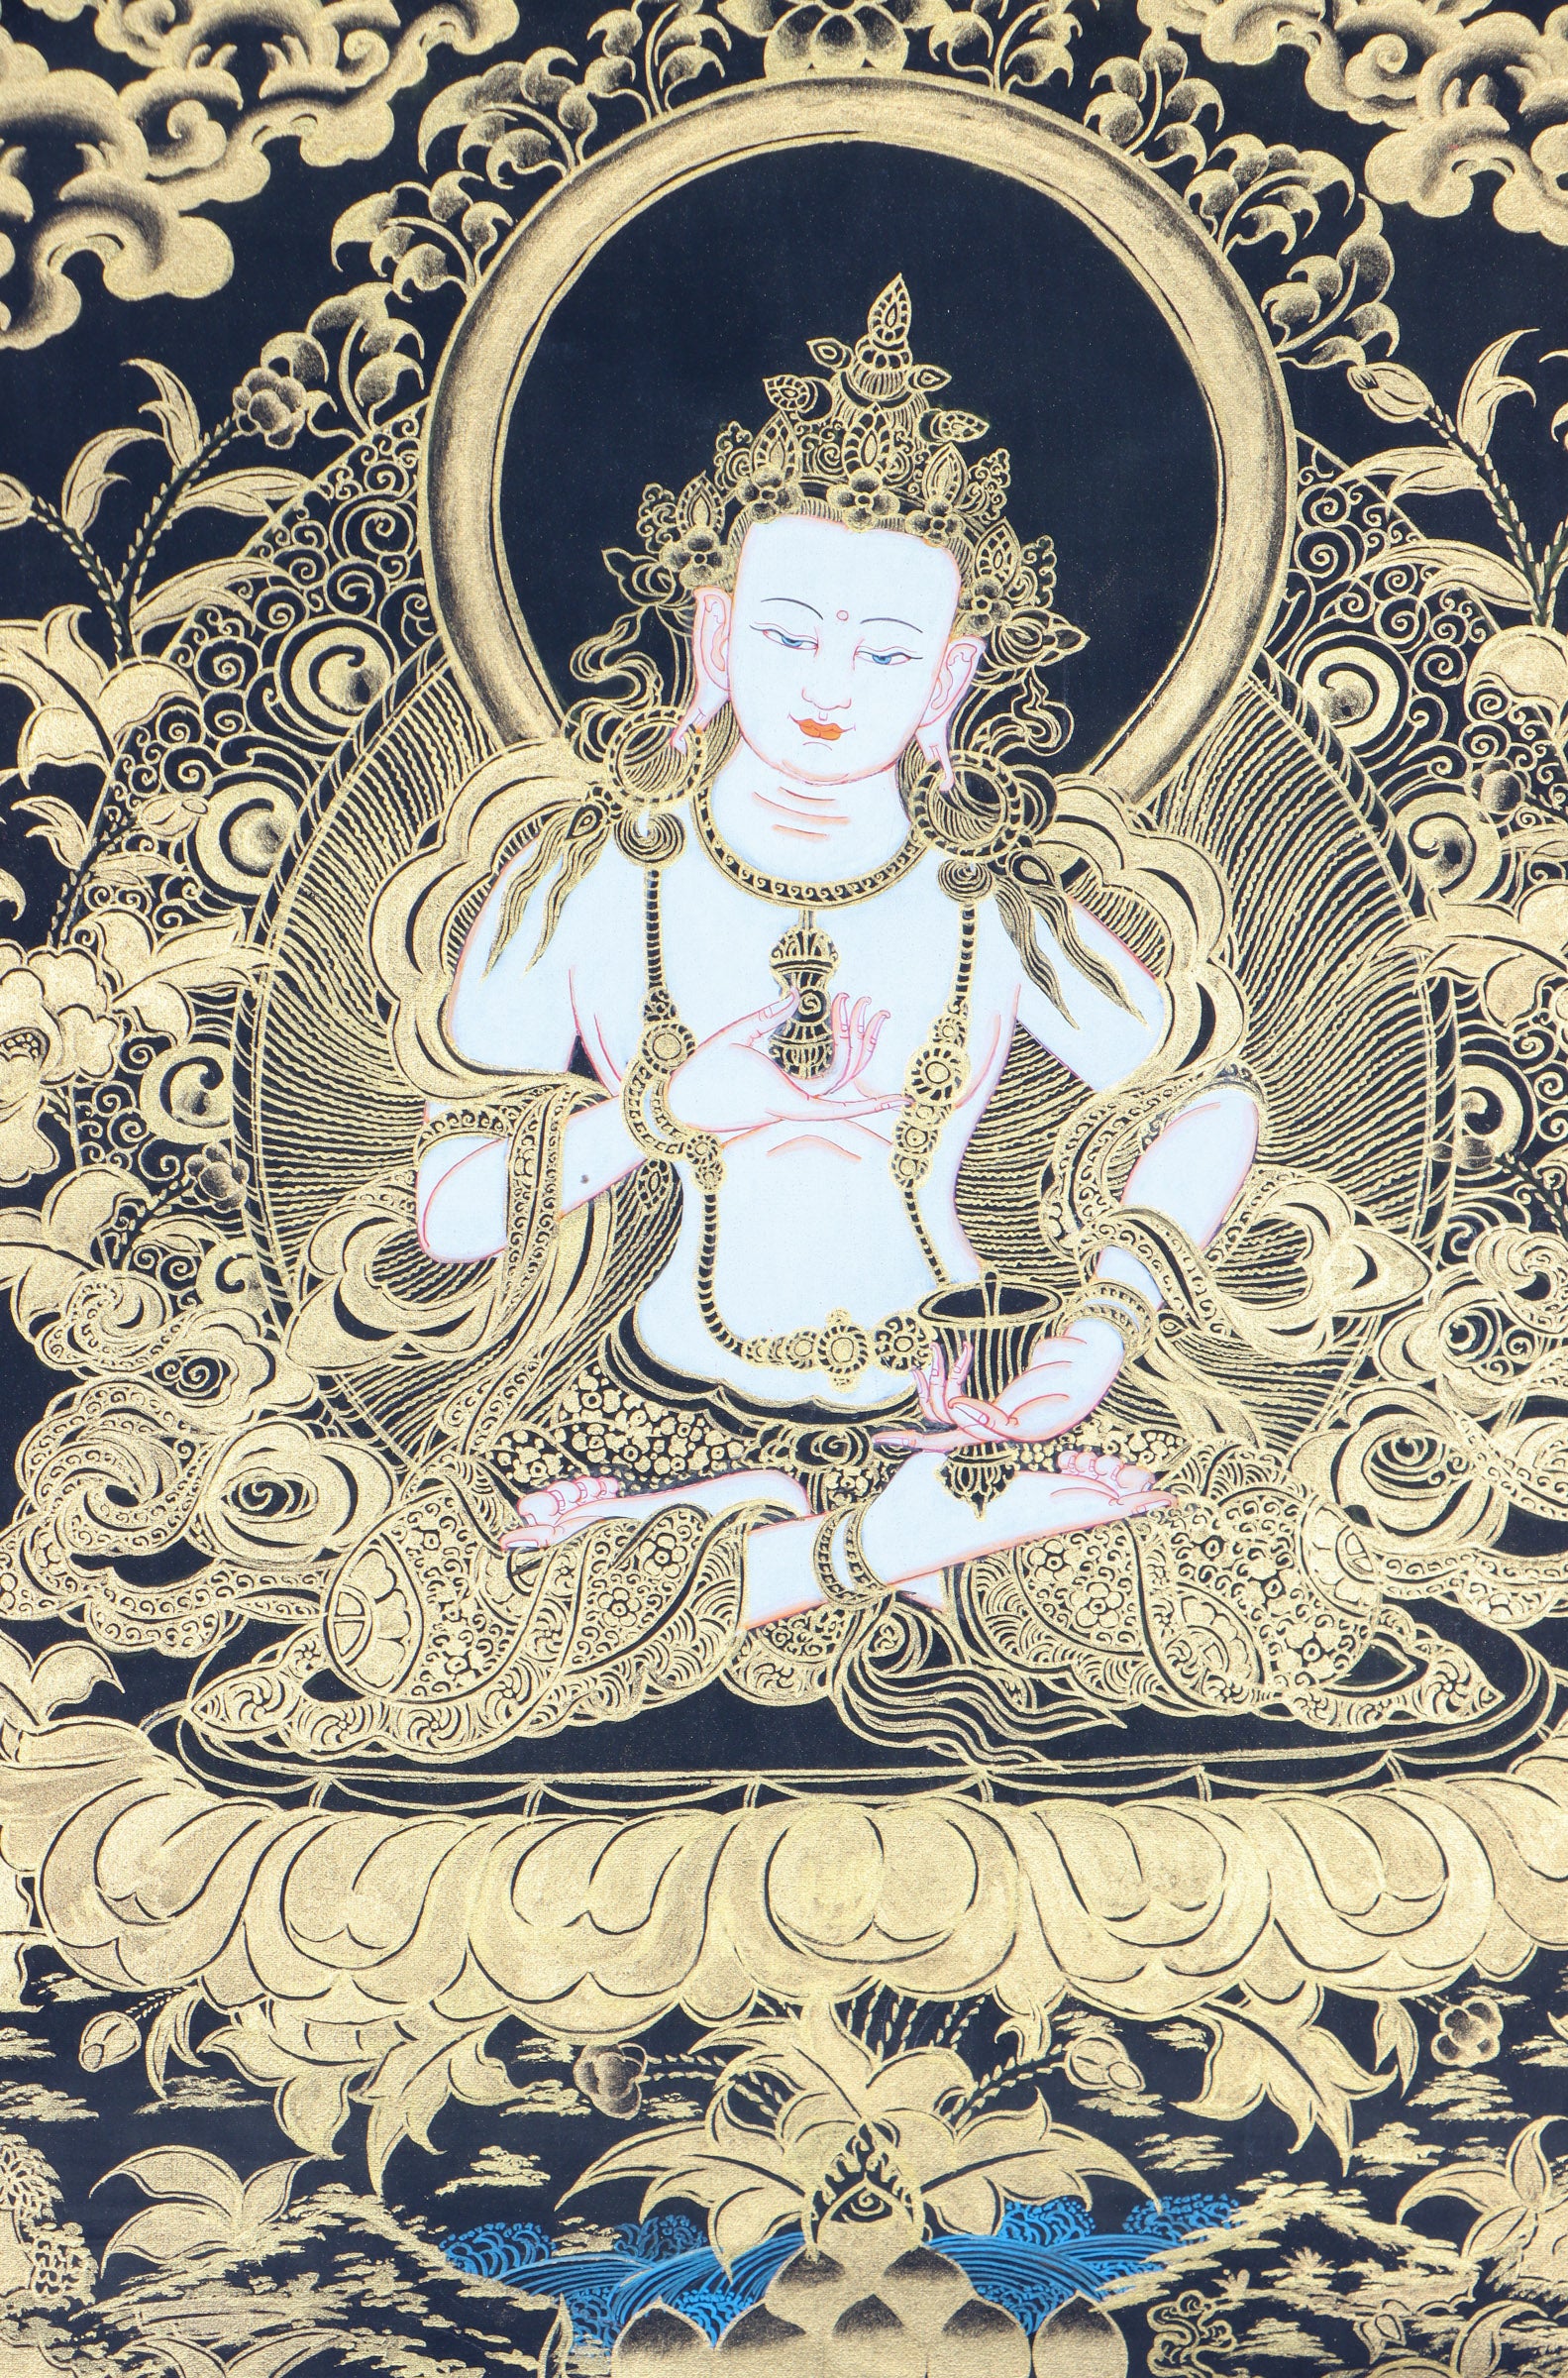 Vajrasattva Thangka Painting - Tibetan painting